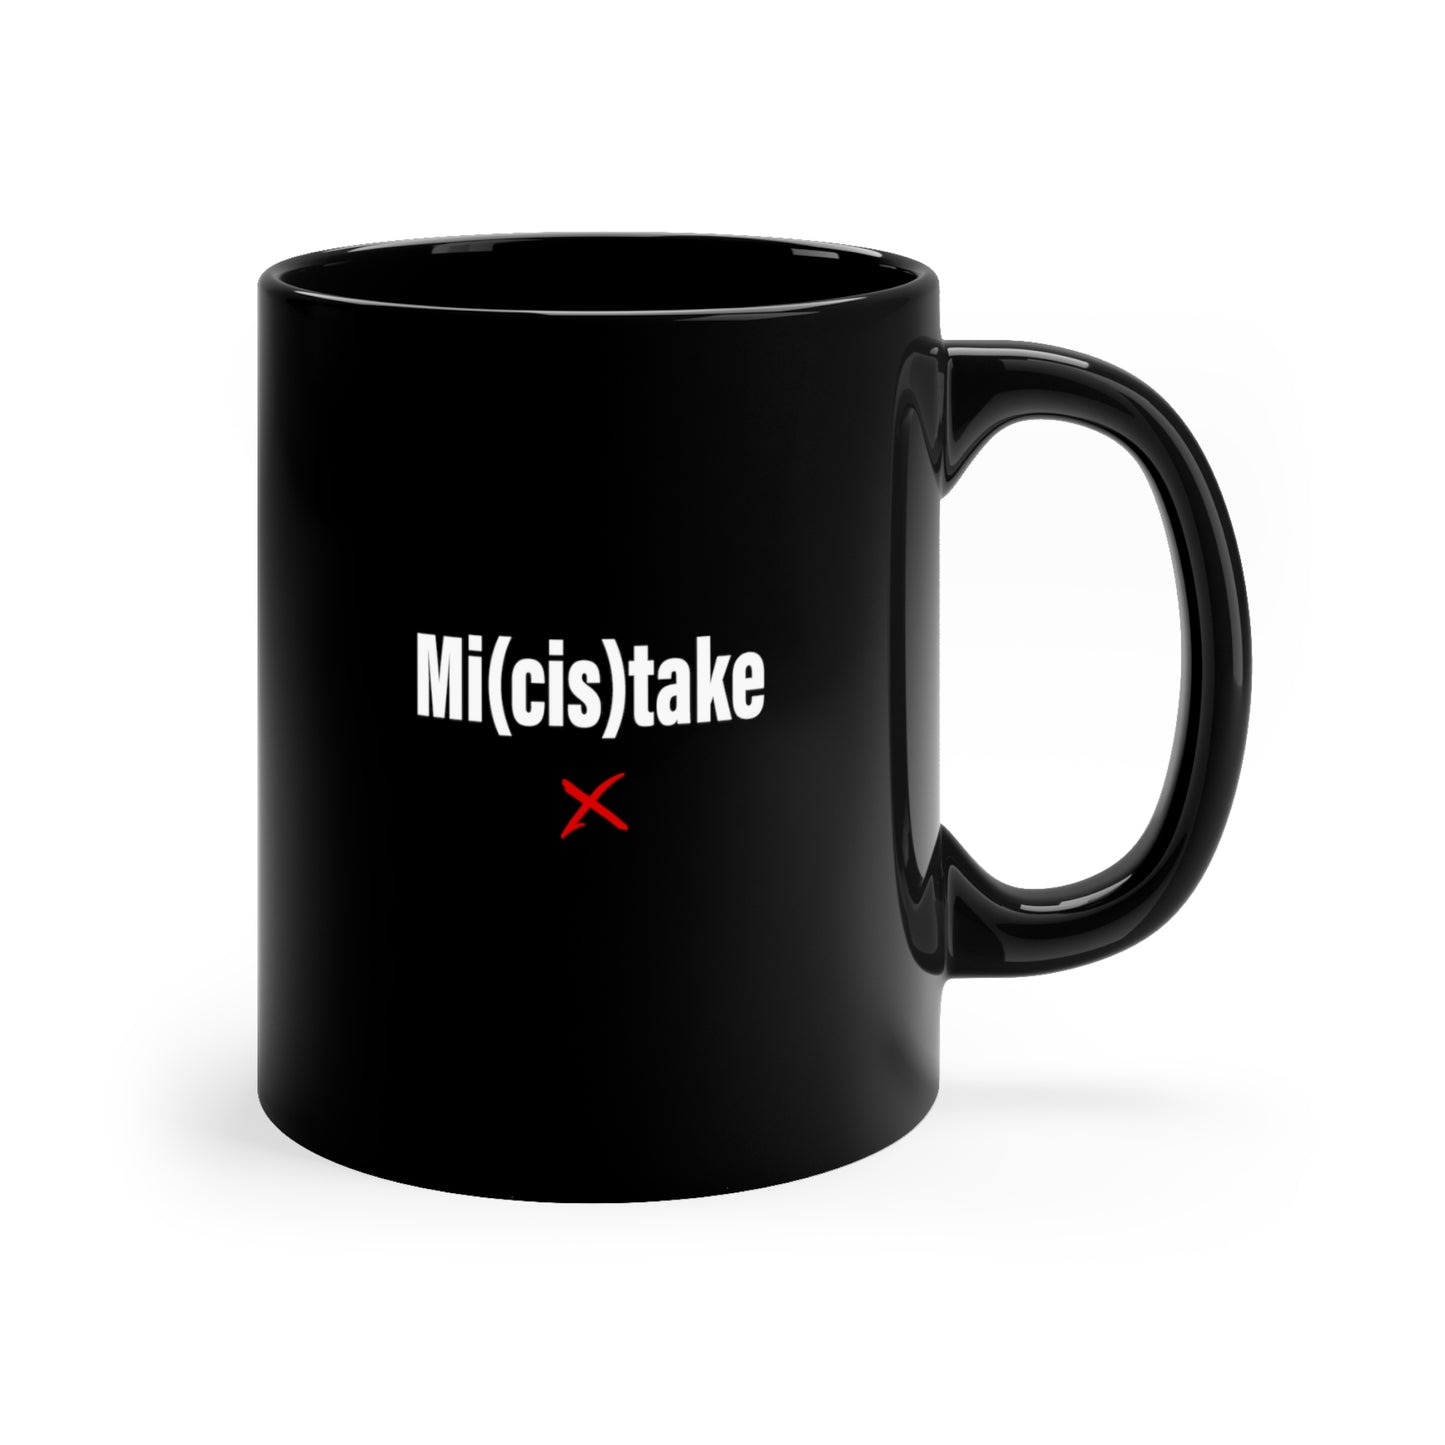 Mi(cis)take - Mug